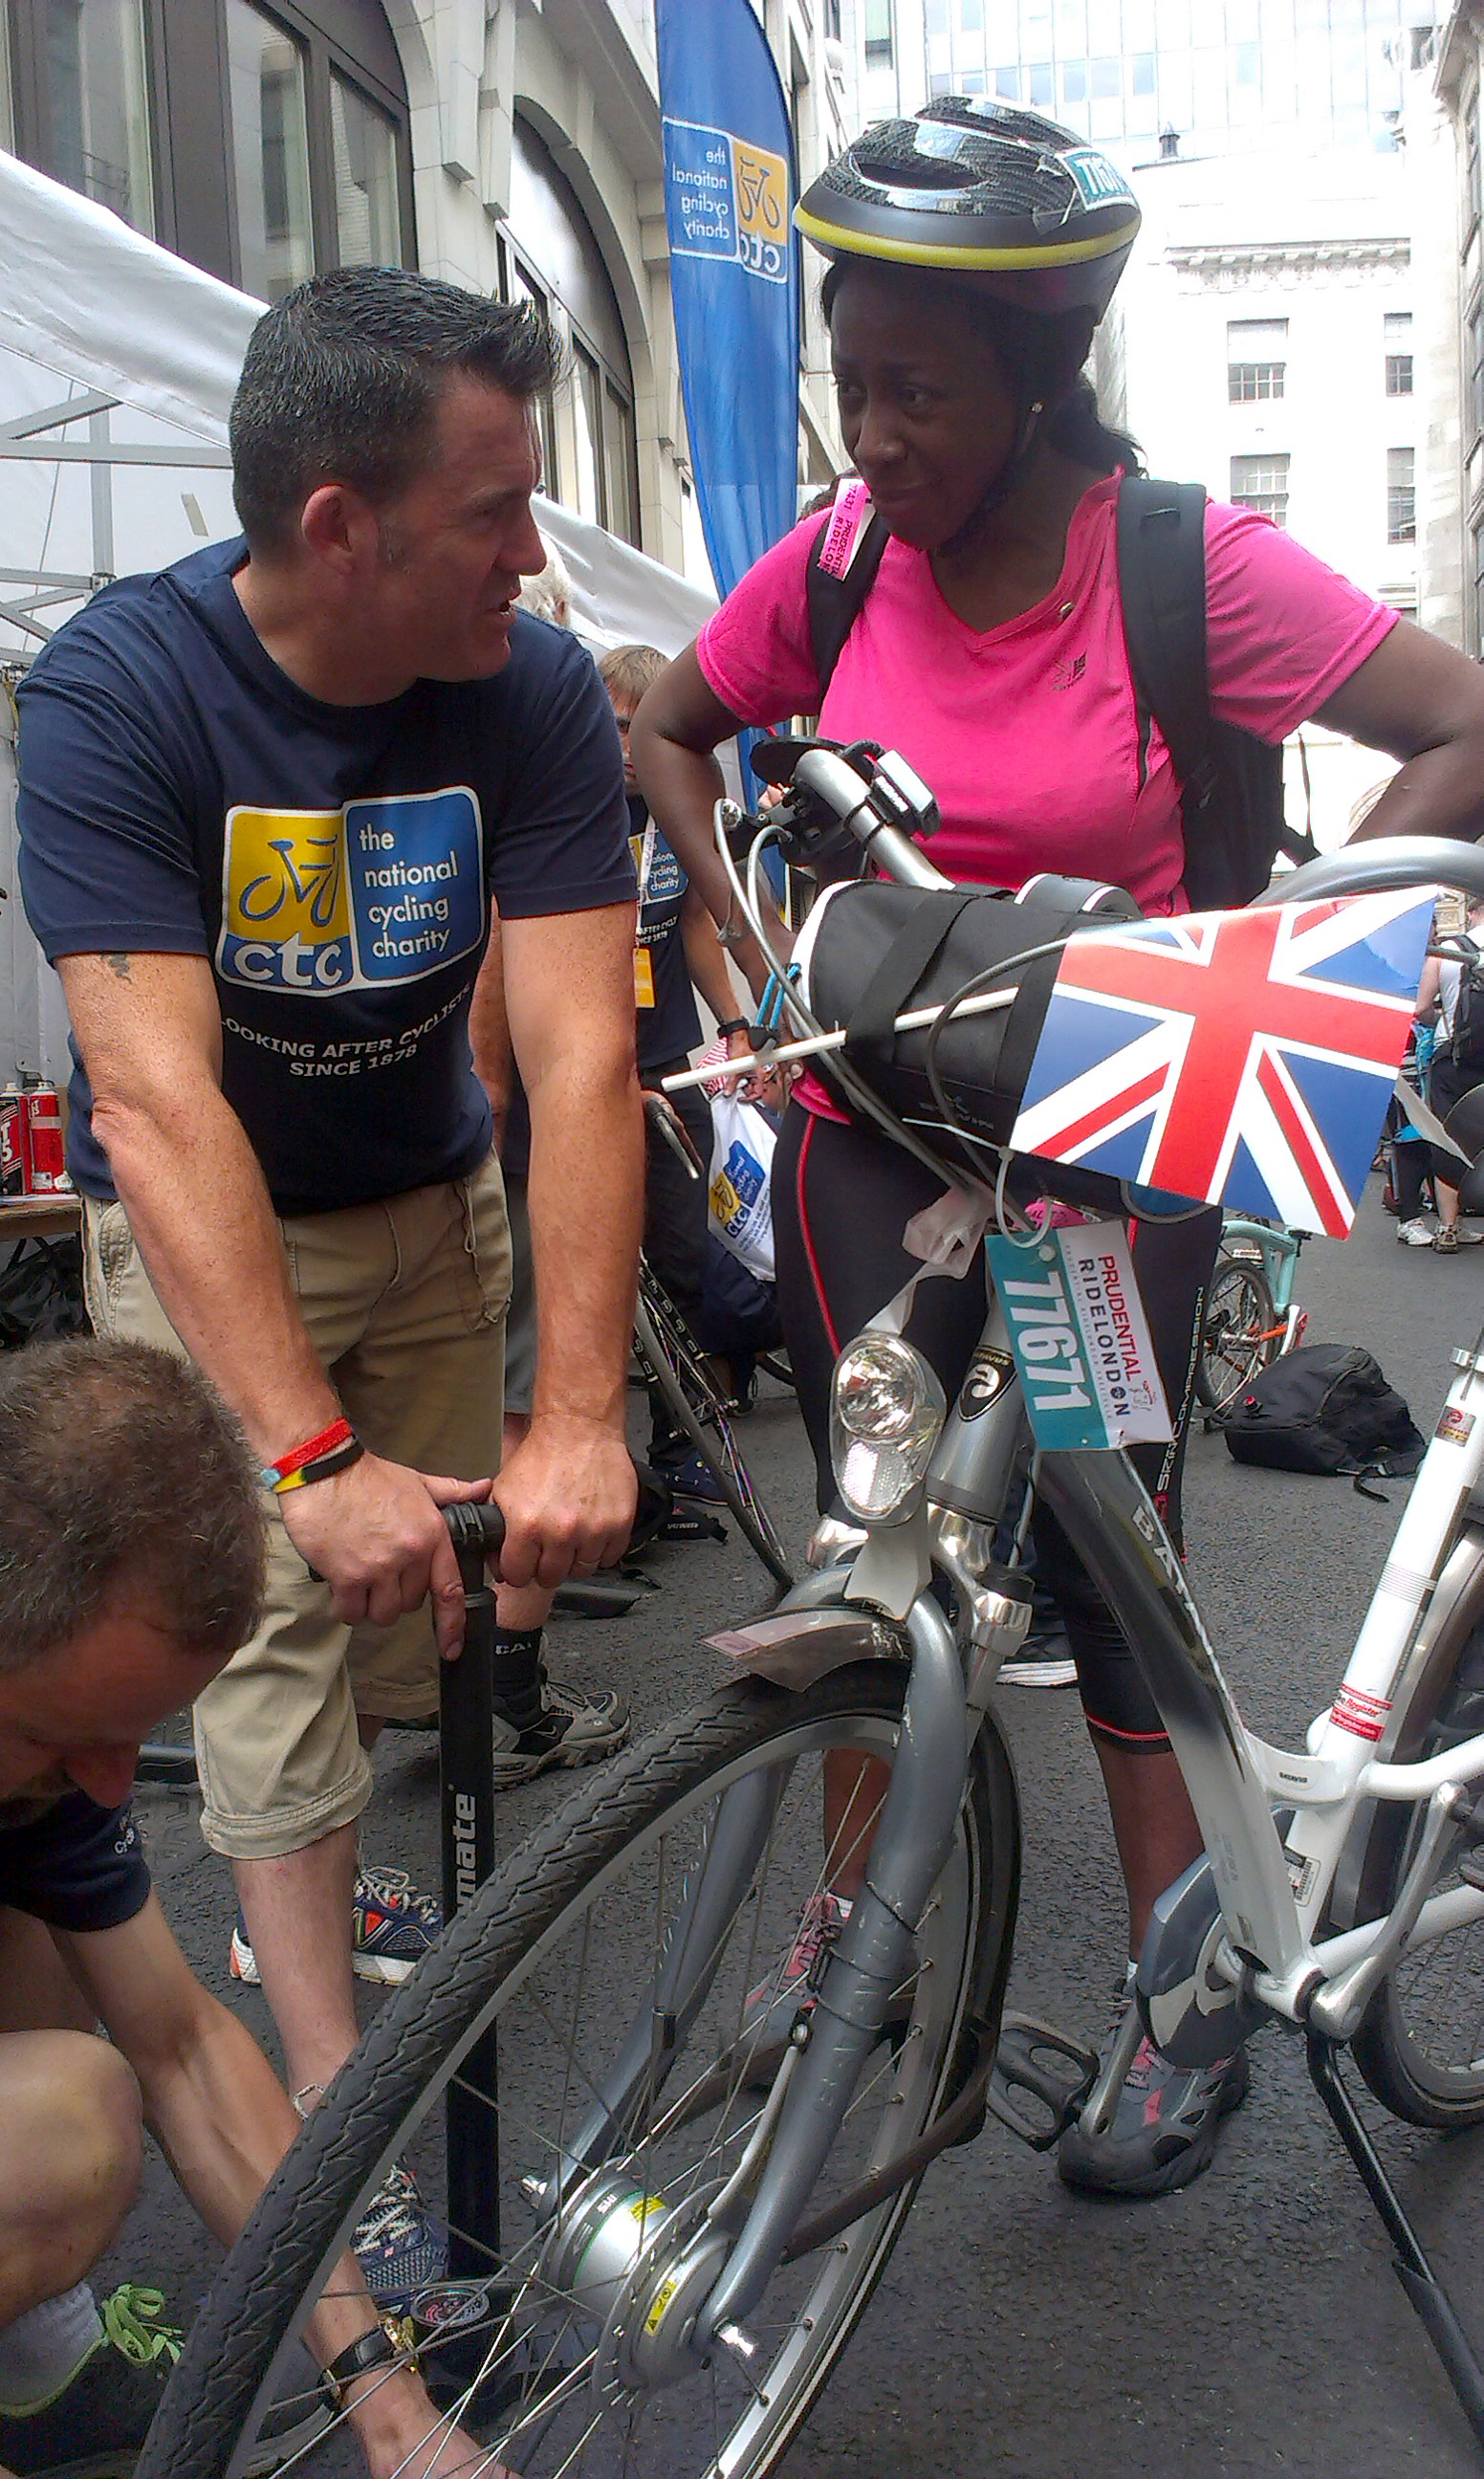 Dr Bike volunteer pumping up tyres at Leadenhall Market